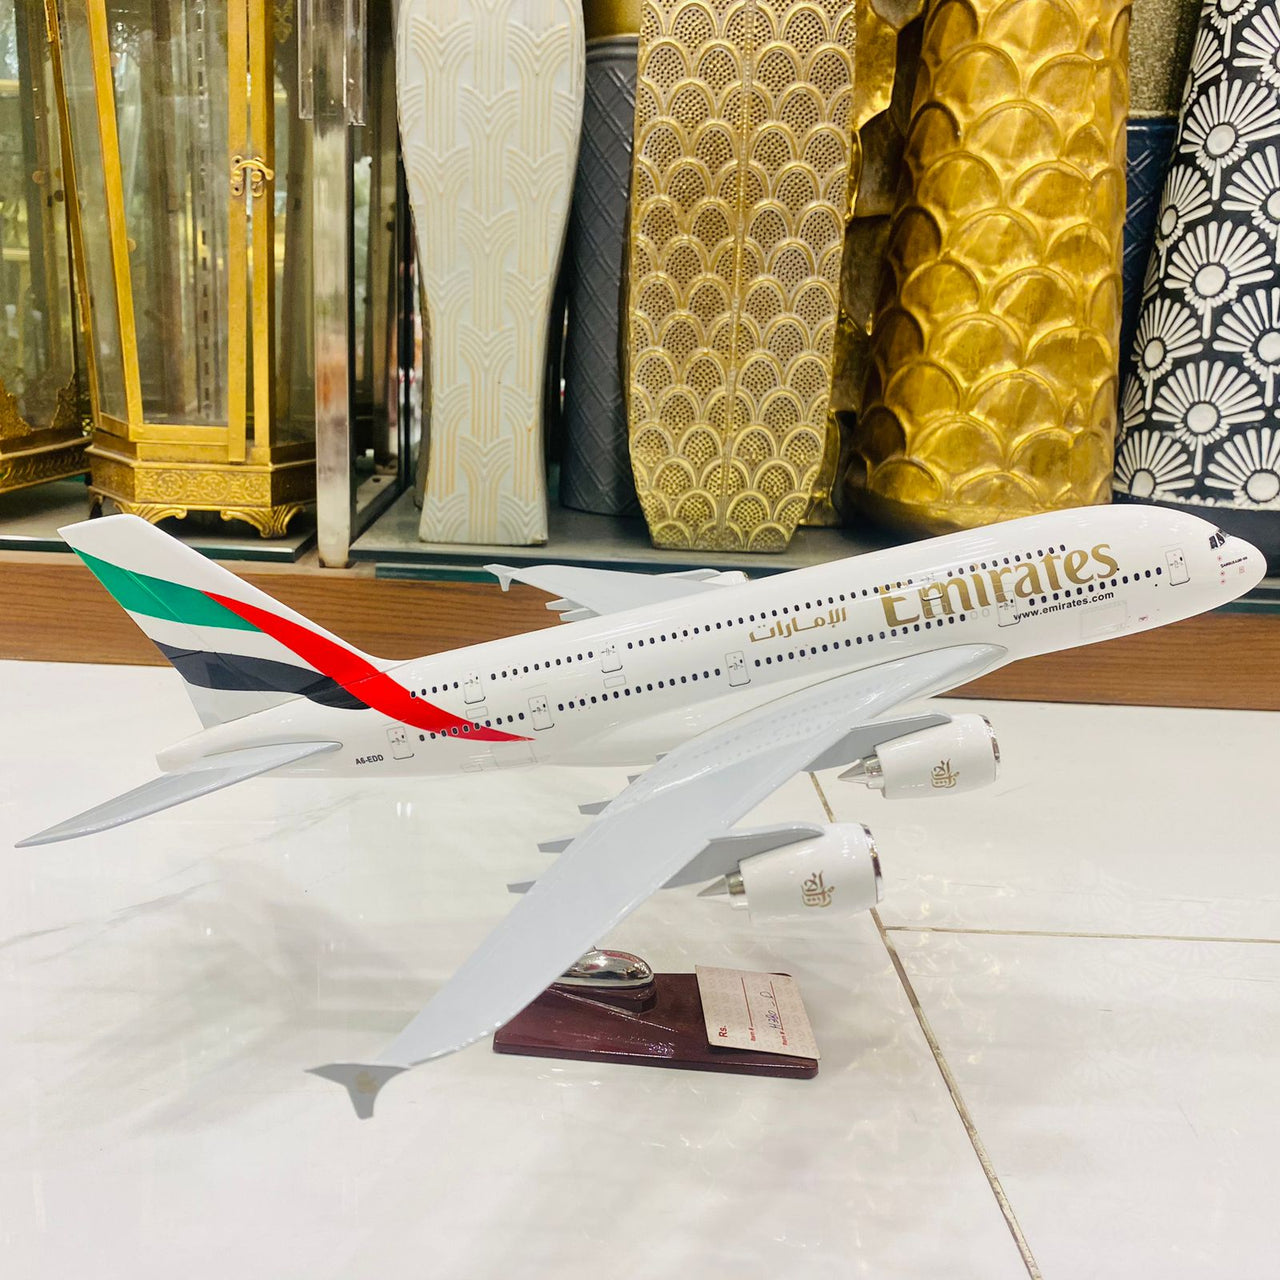 Emirates Airlines Airbus A380-800